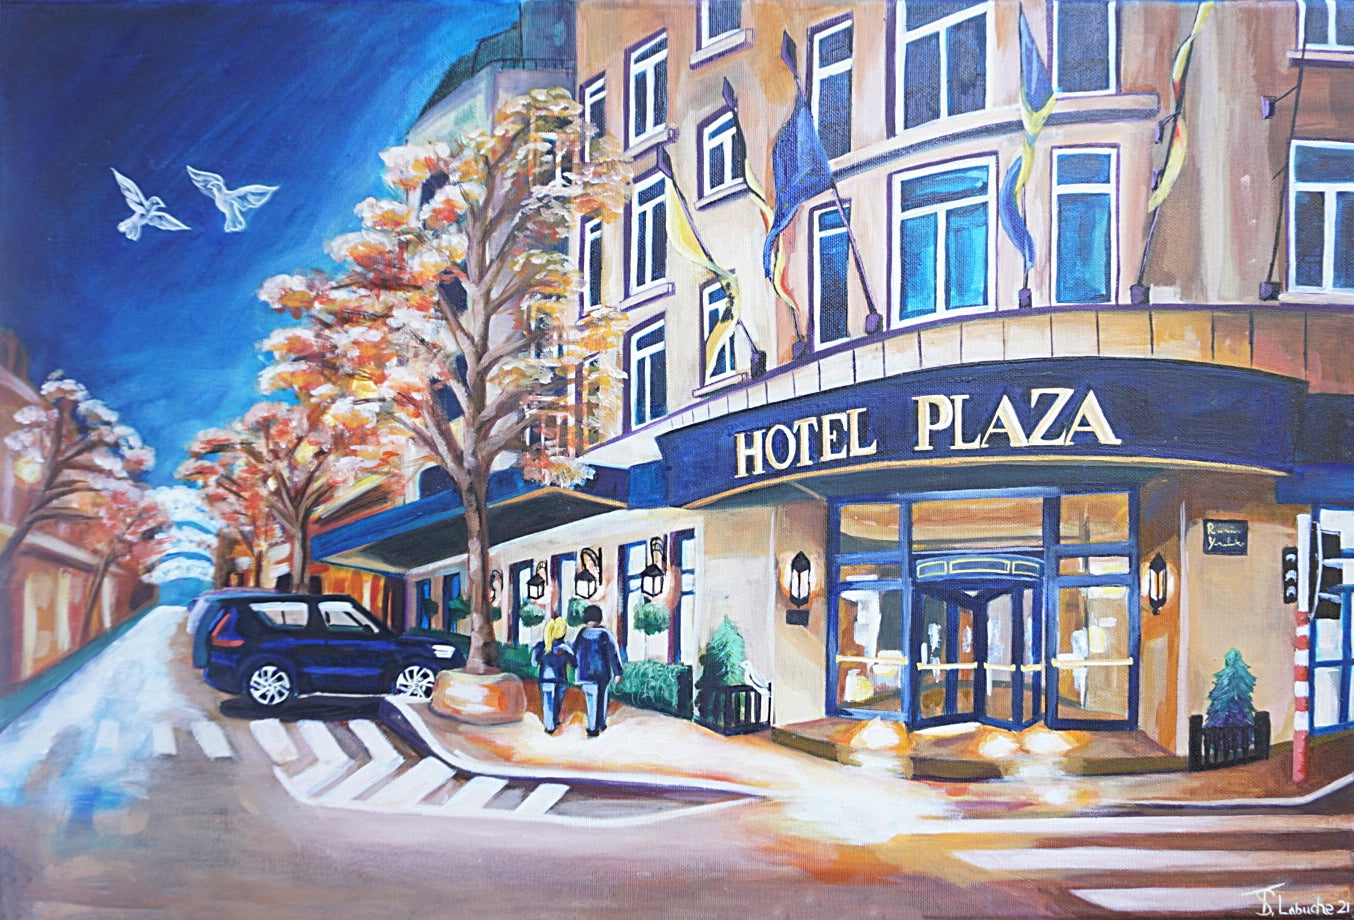 Hotel Plaza - Commission